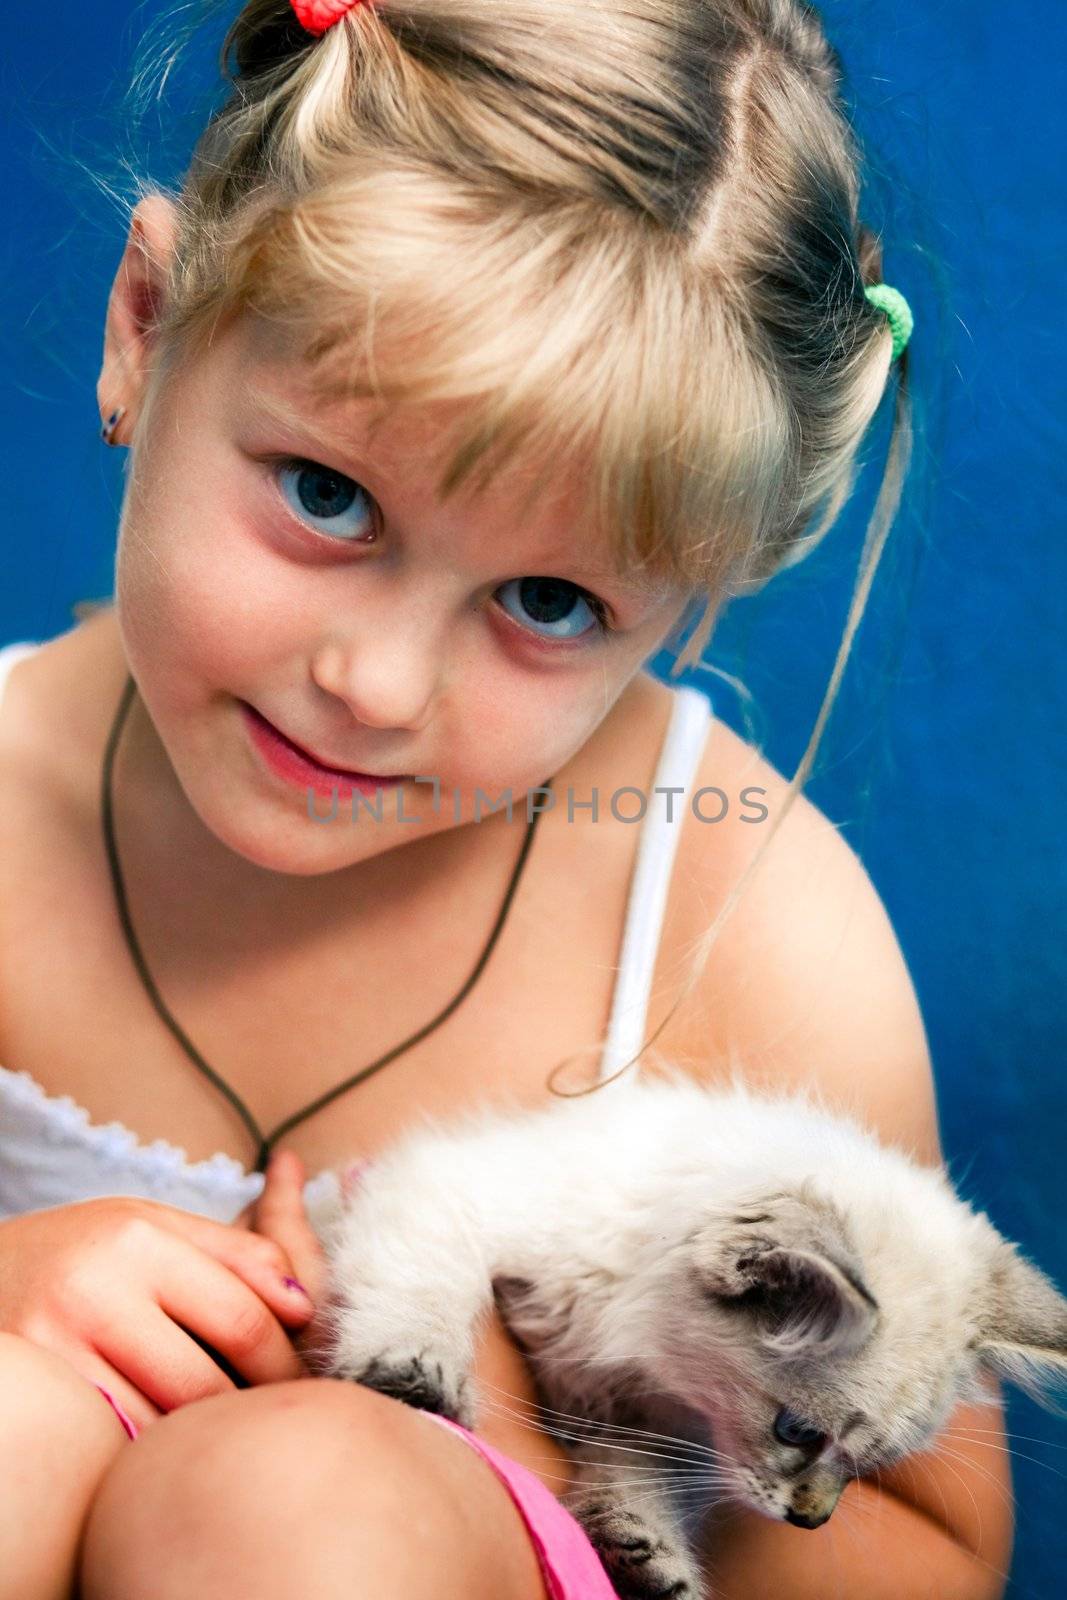 Girl with a kitten by velkol